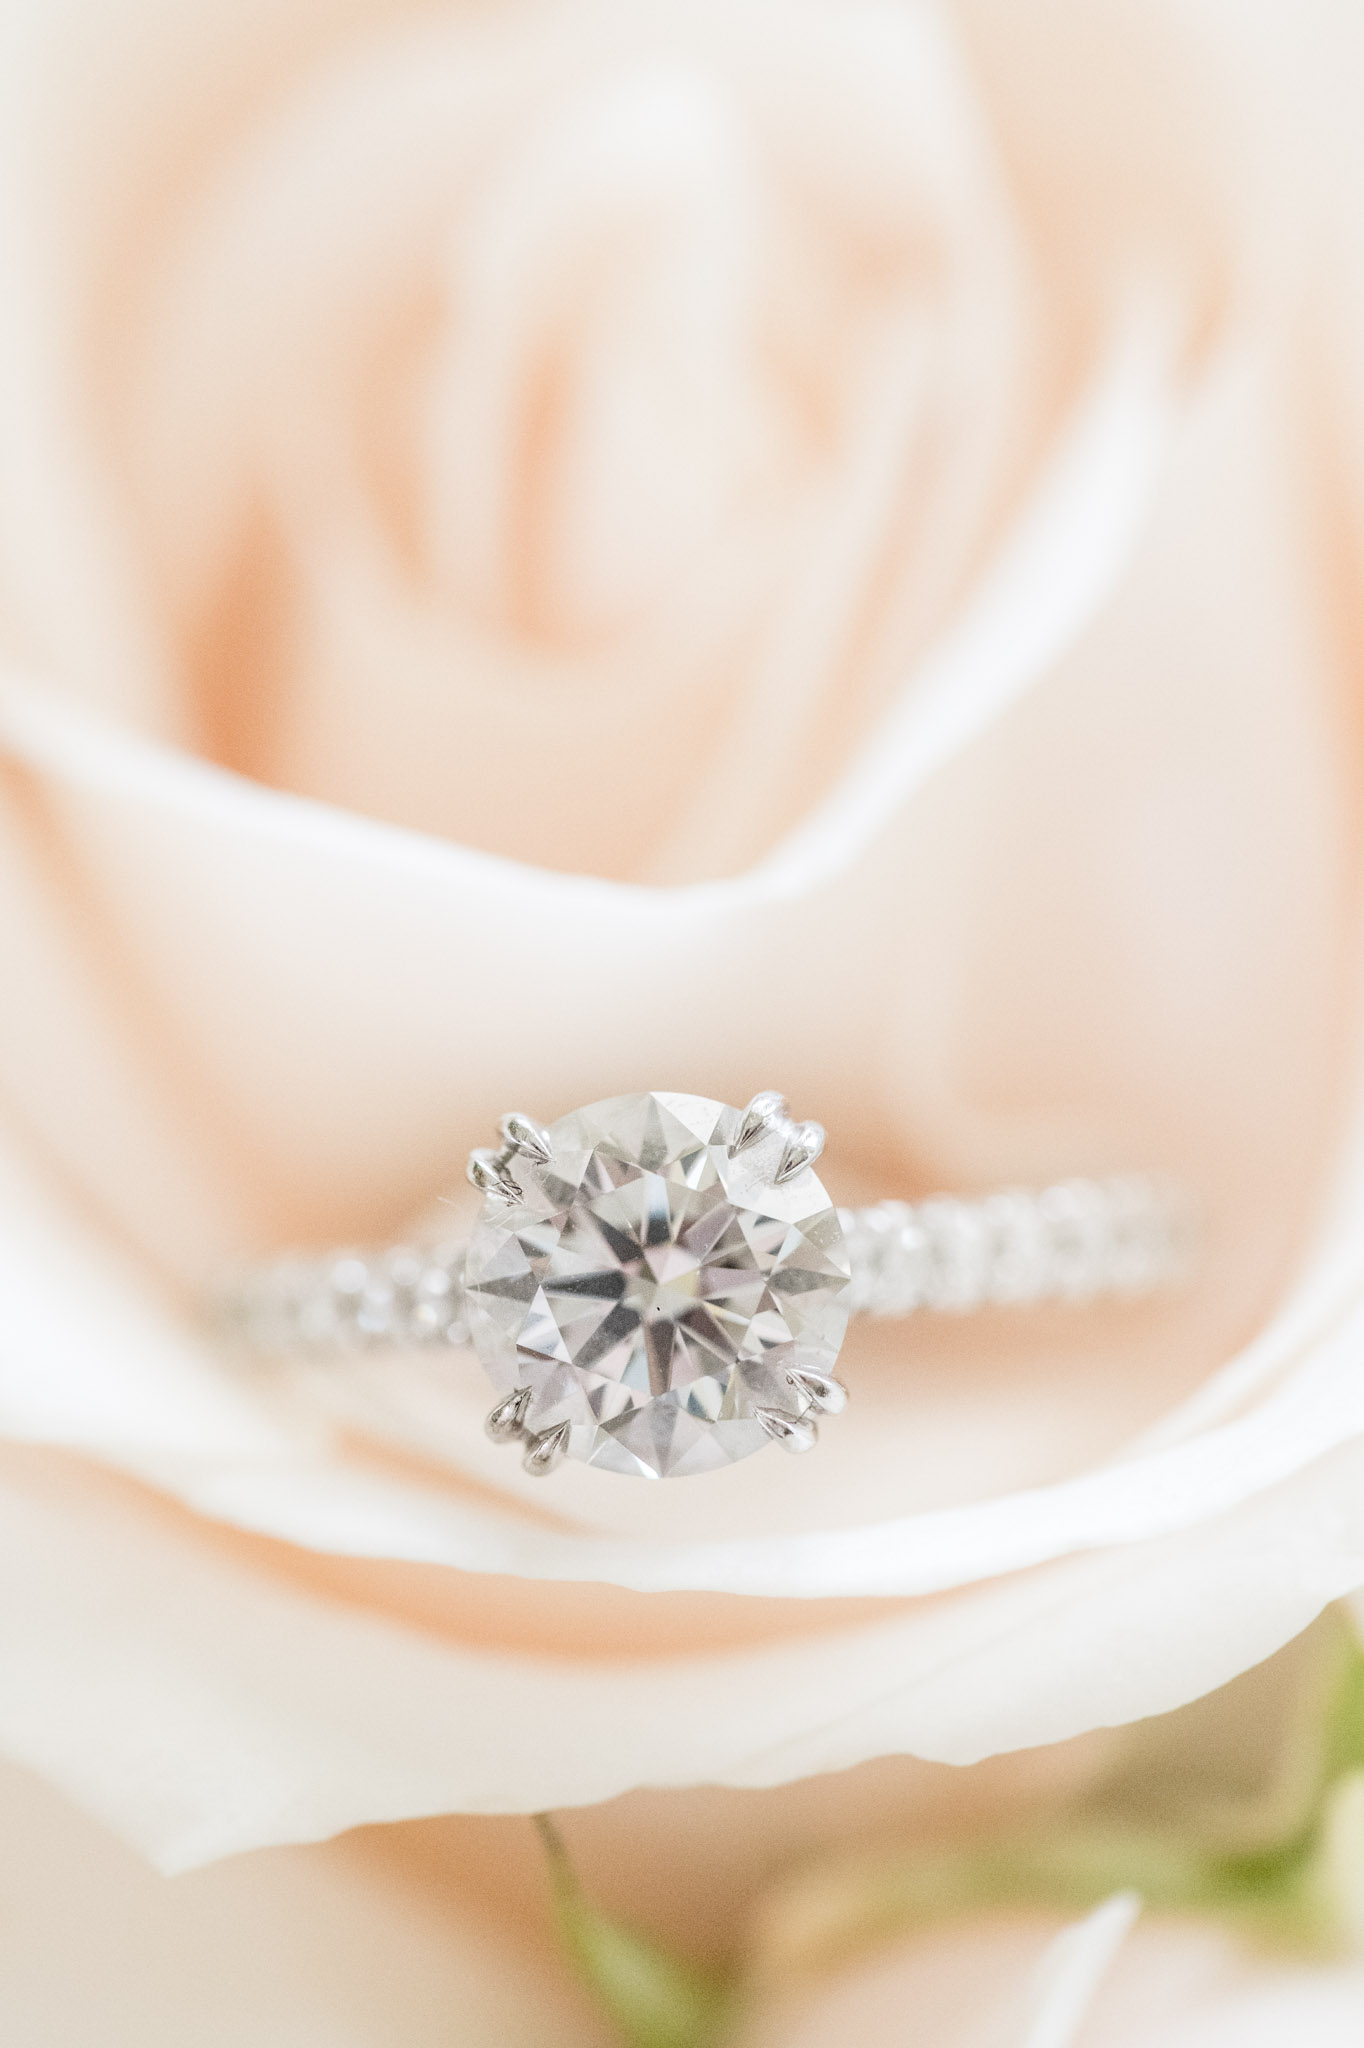 Closeup of wedding ring.